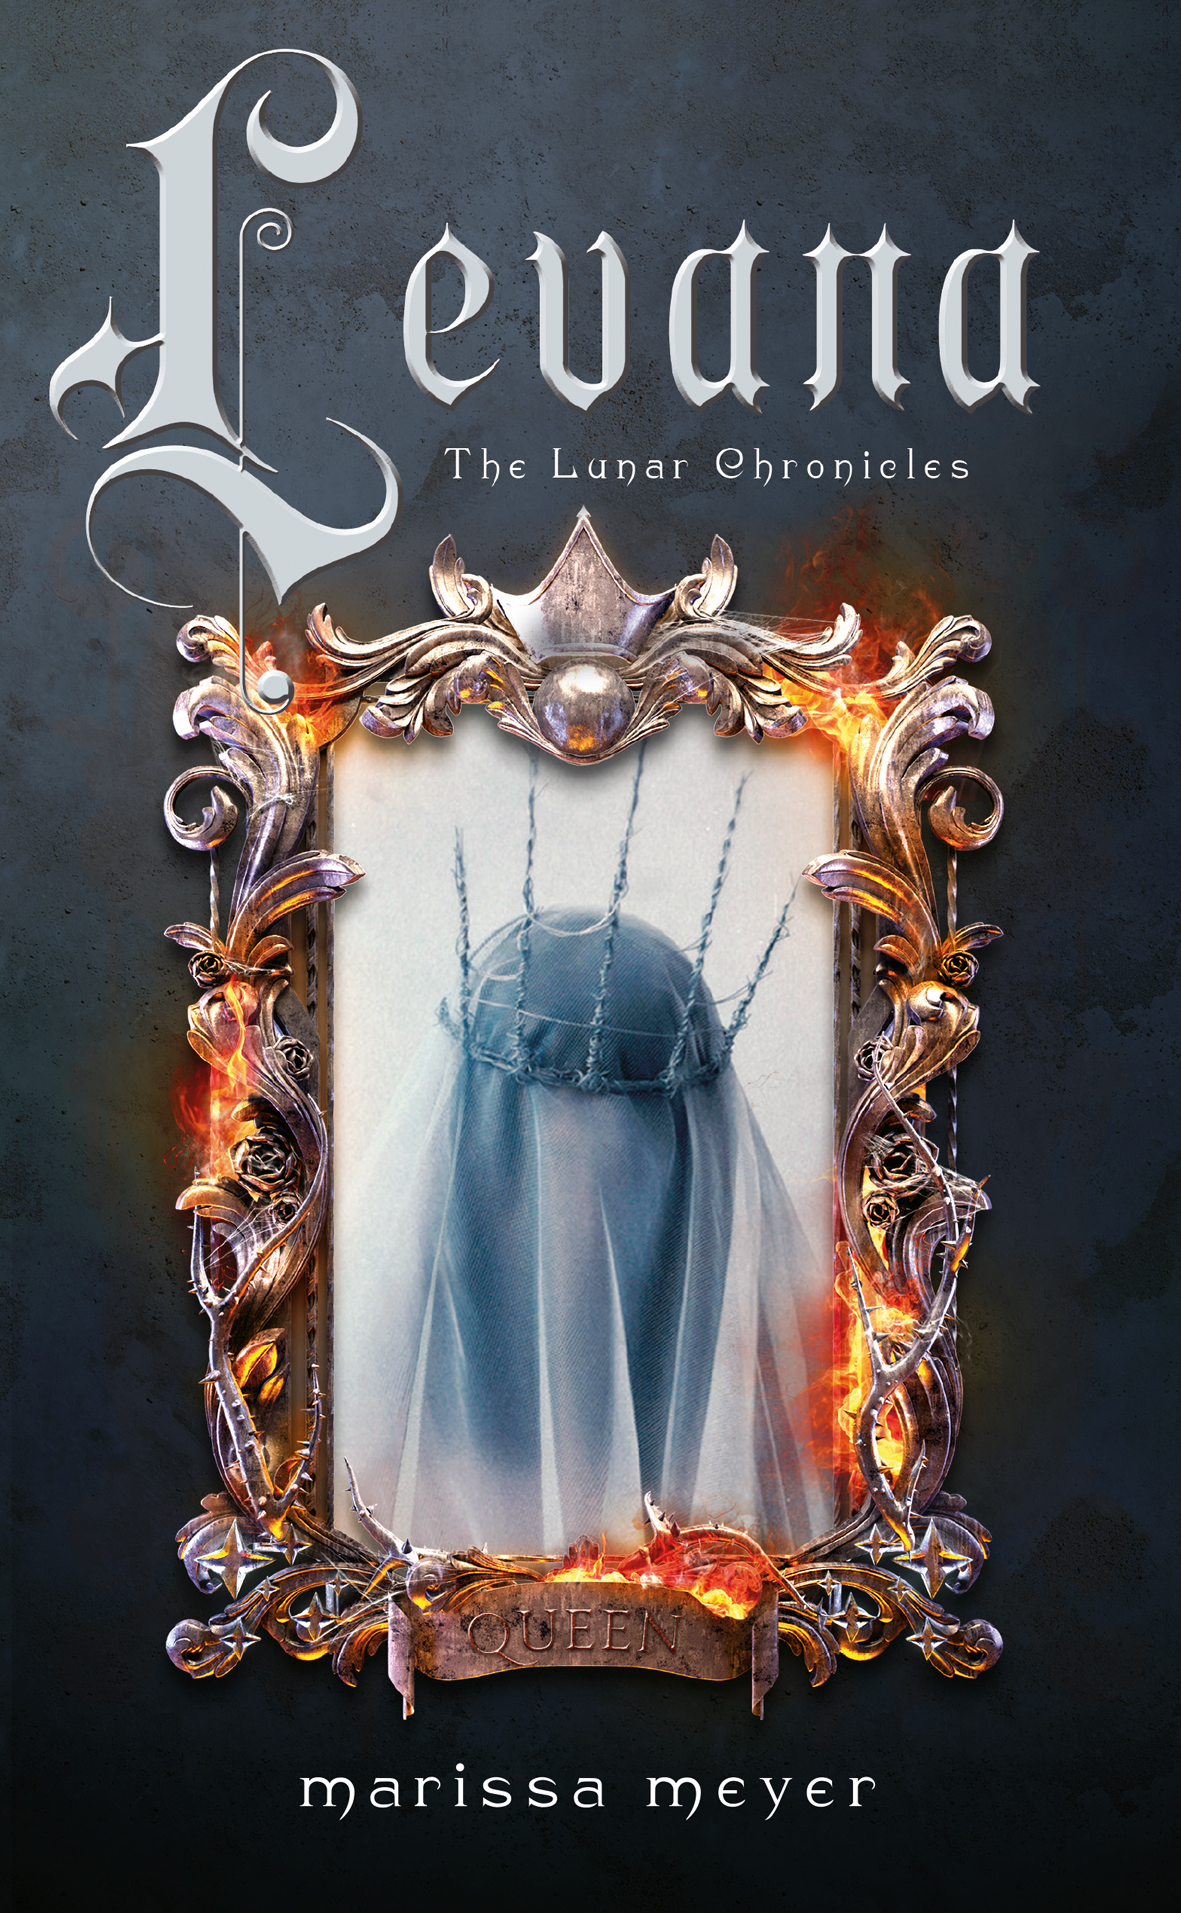 Marissa Meyer's Fairest cover featuring the female villain Queen Levana